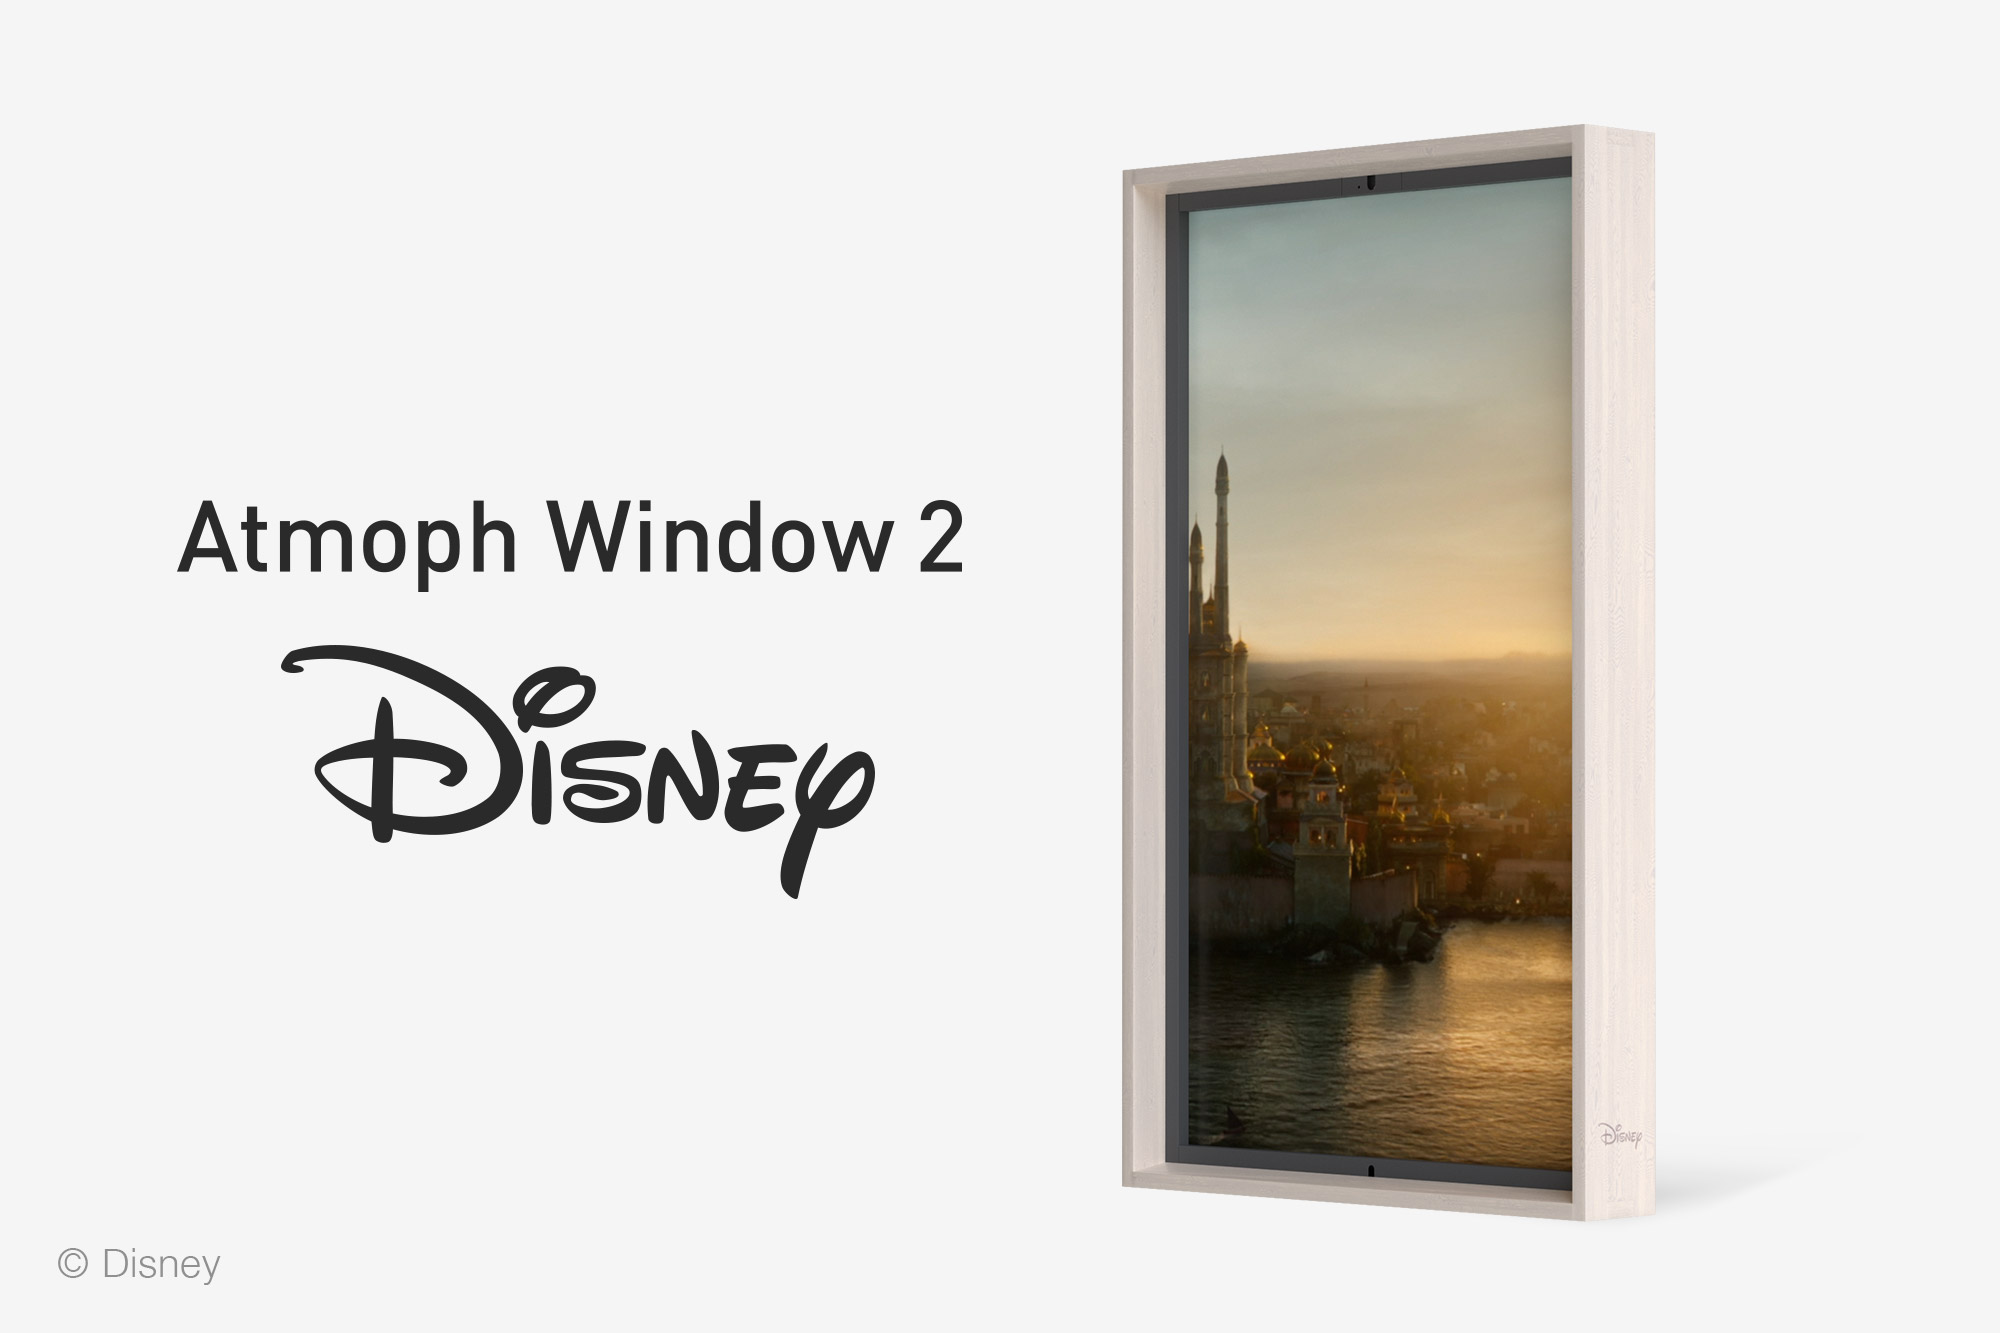 Atmoph Jp ディズニー実写映画 アラジン のアグラバーの夕日 こんな世界に住めたらと思ったことはありませんか Atmoph Window 2 Disney を壁にかけるだけで 景色が目の前に広がります 心地よい音とともに いろいろなディズニー映画の世界を感じて